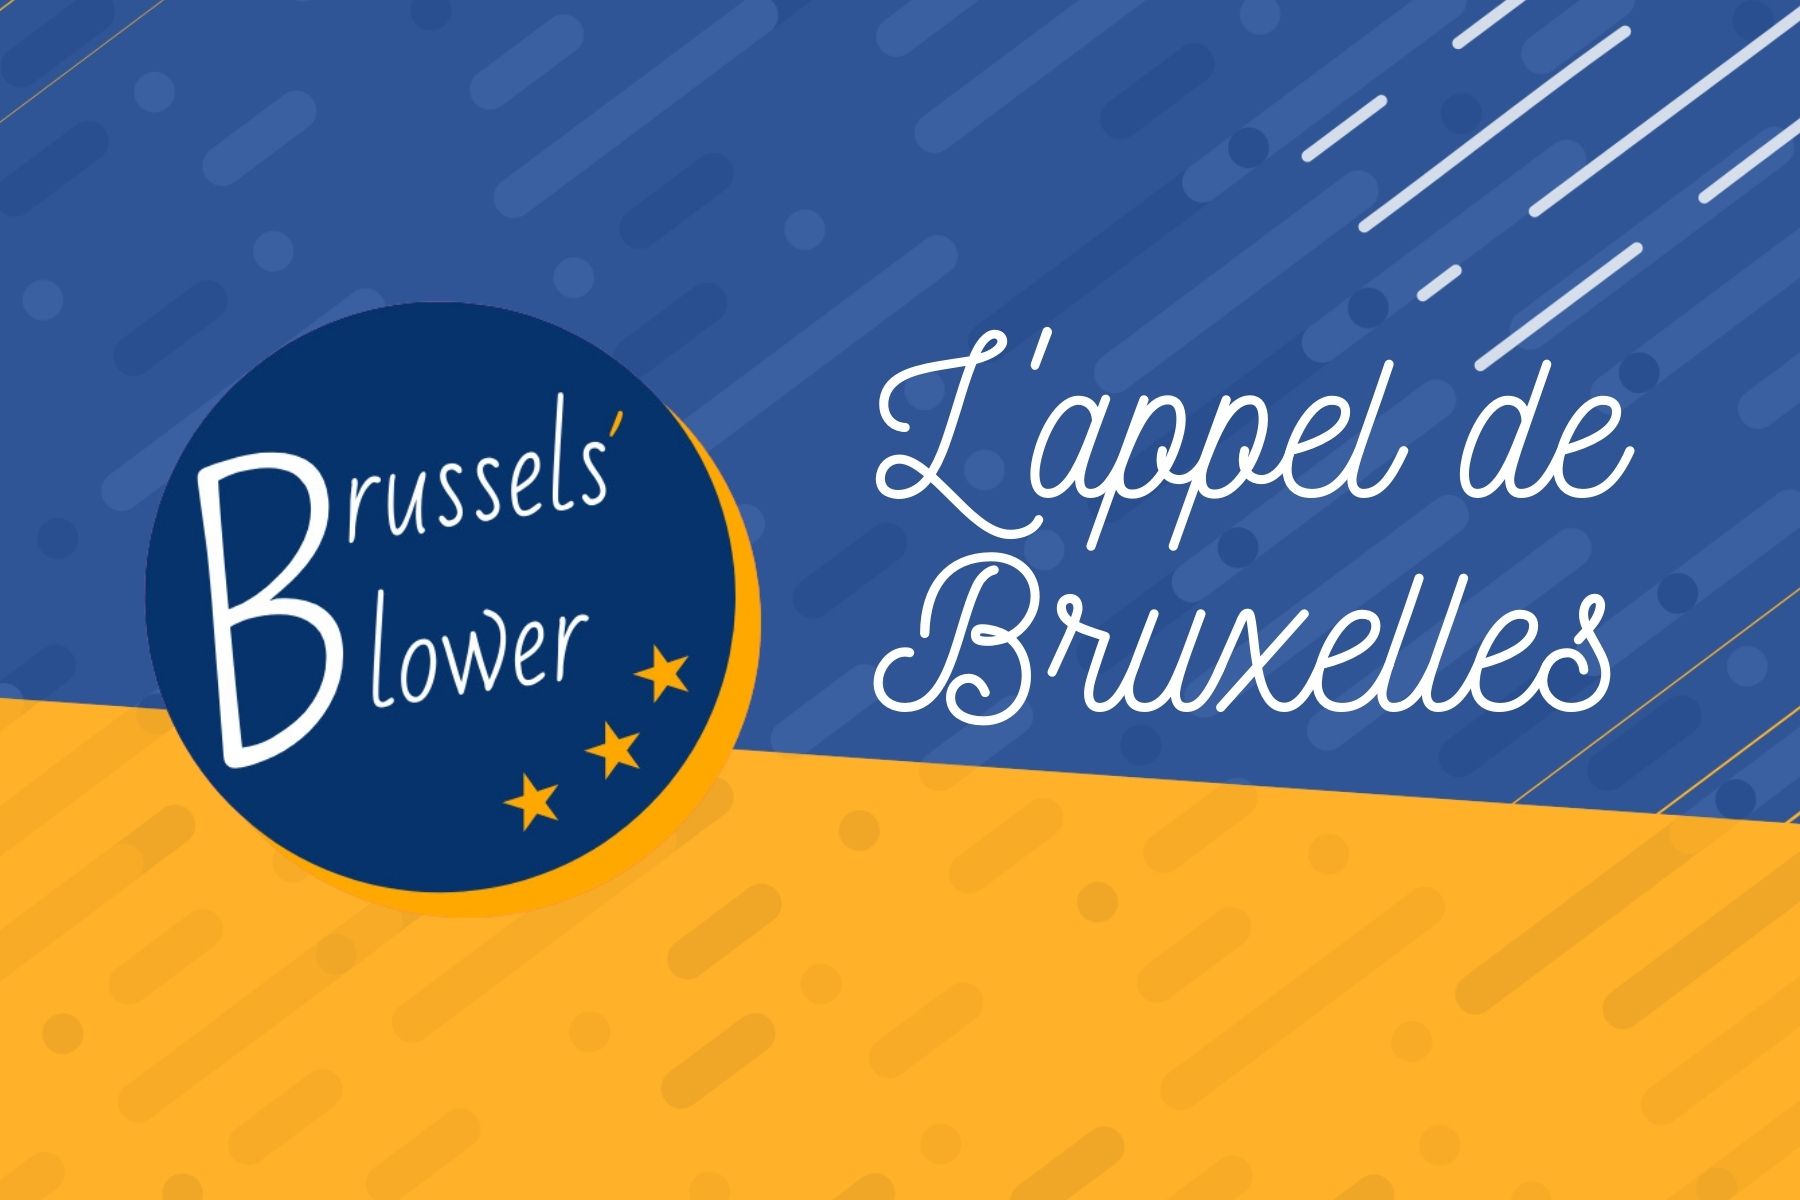 Brussels’ Blower: L’appel de Bruxelles #6 – Brune (Ursula von der Leyen)